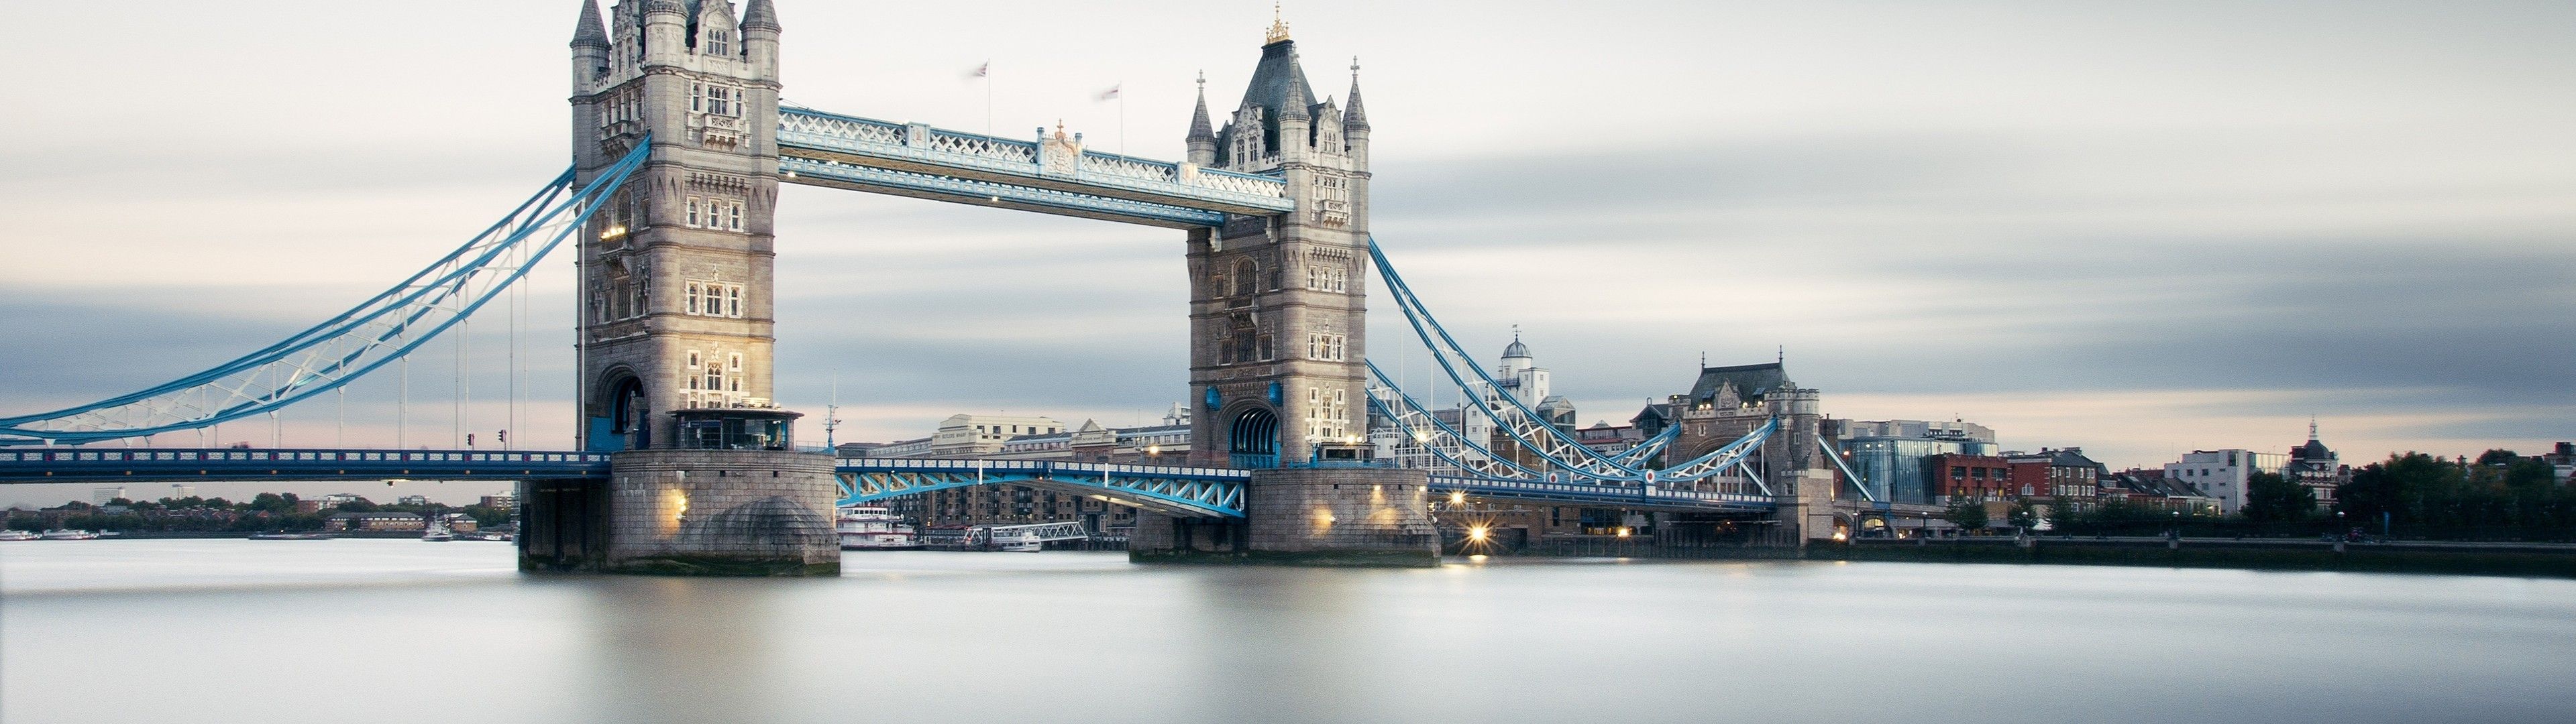 Download 3840x1080 London Bridge, River, Cloudy Weather Wallpaper